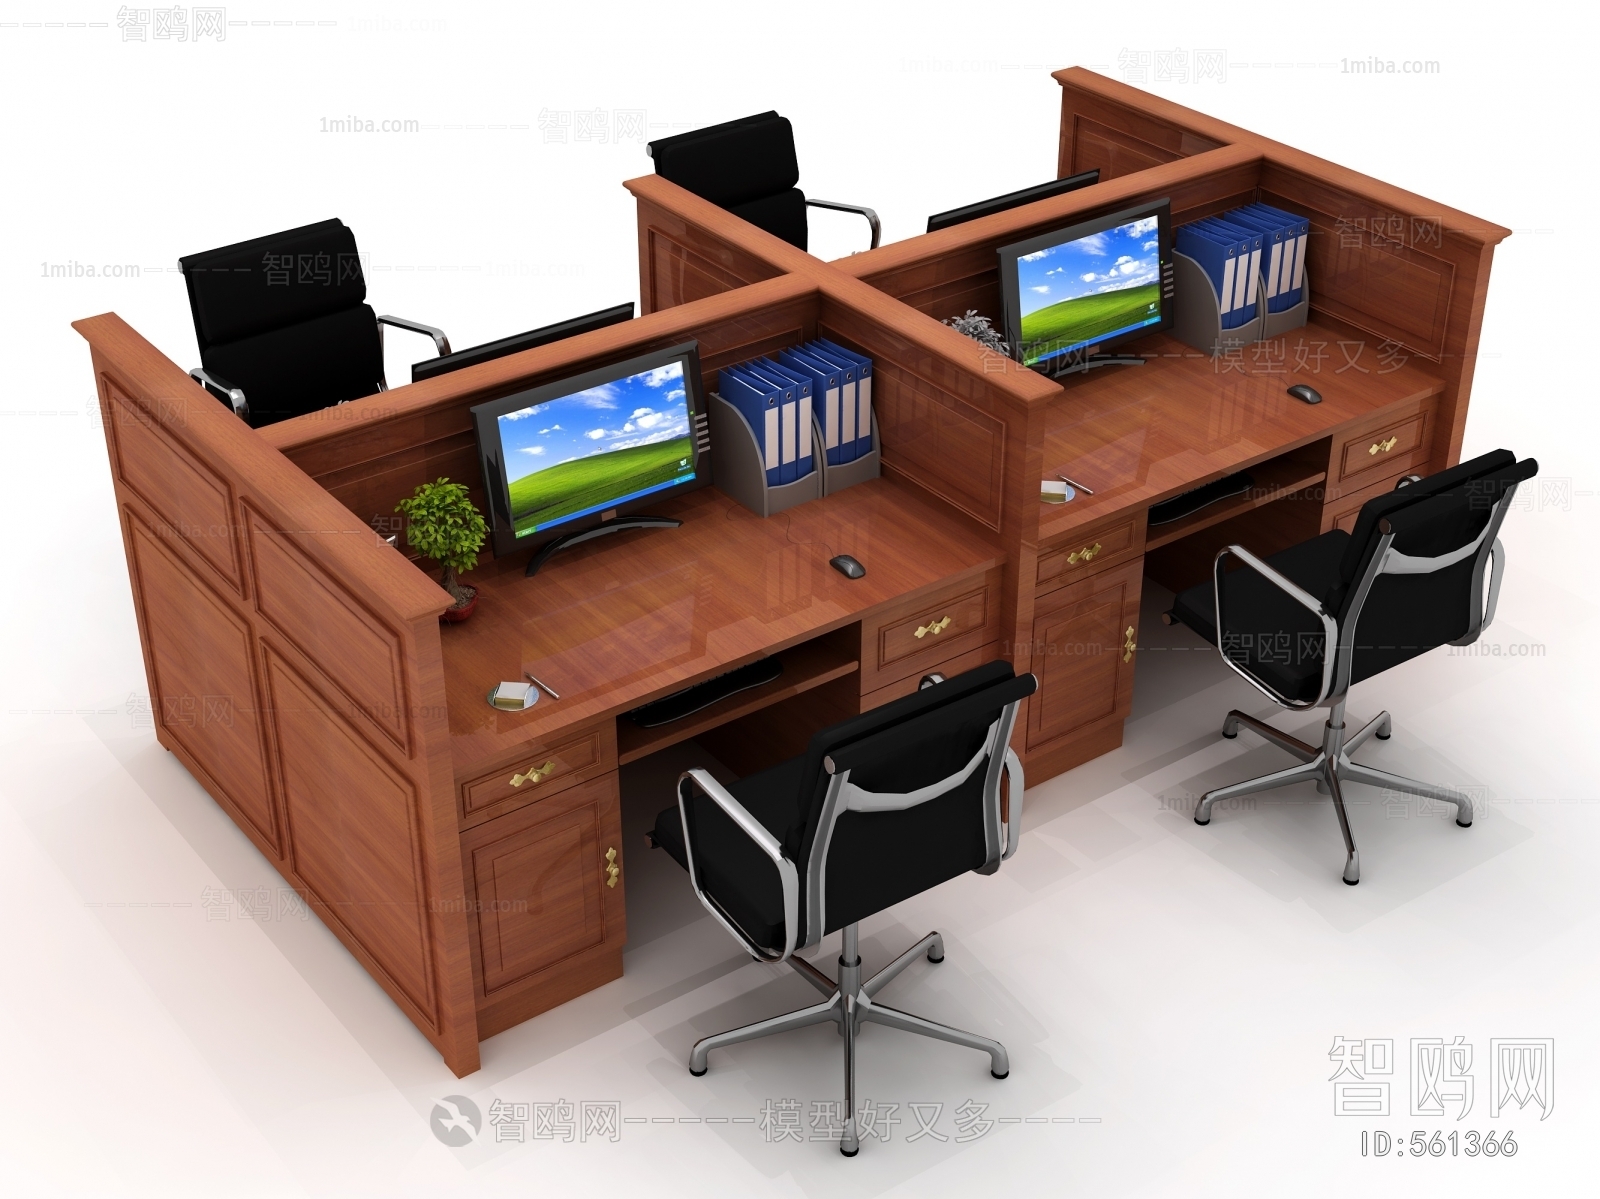 Simple European Style Office Table